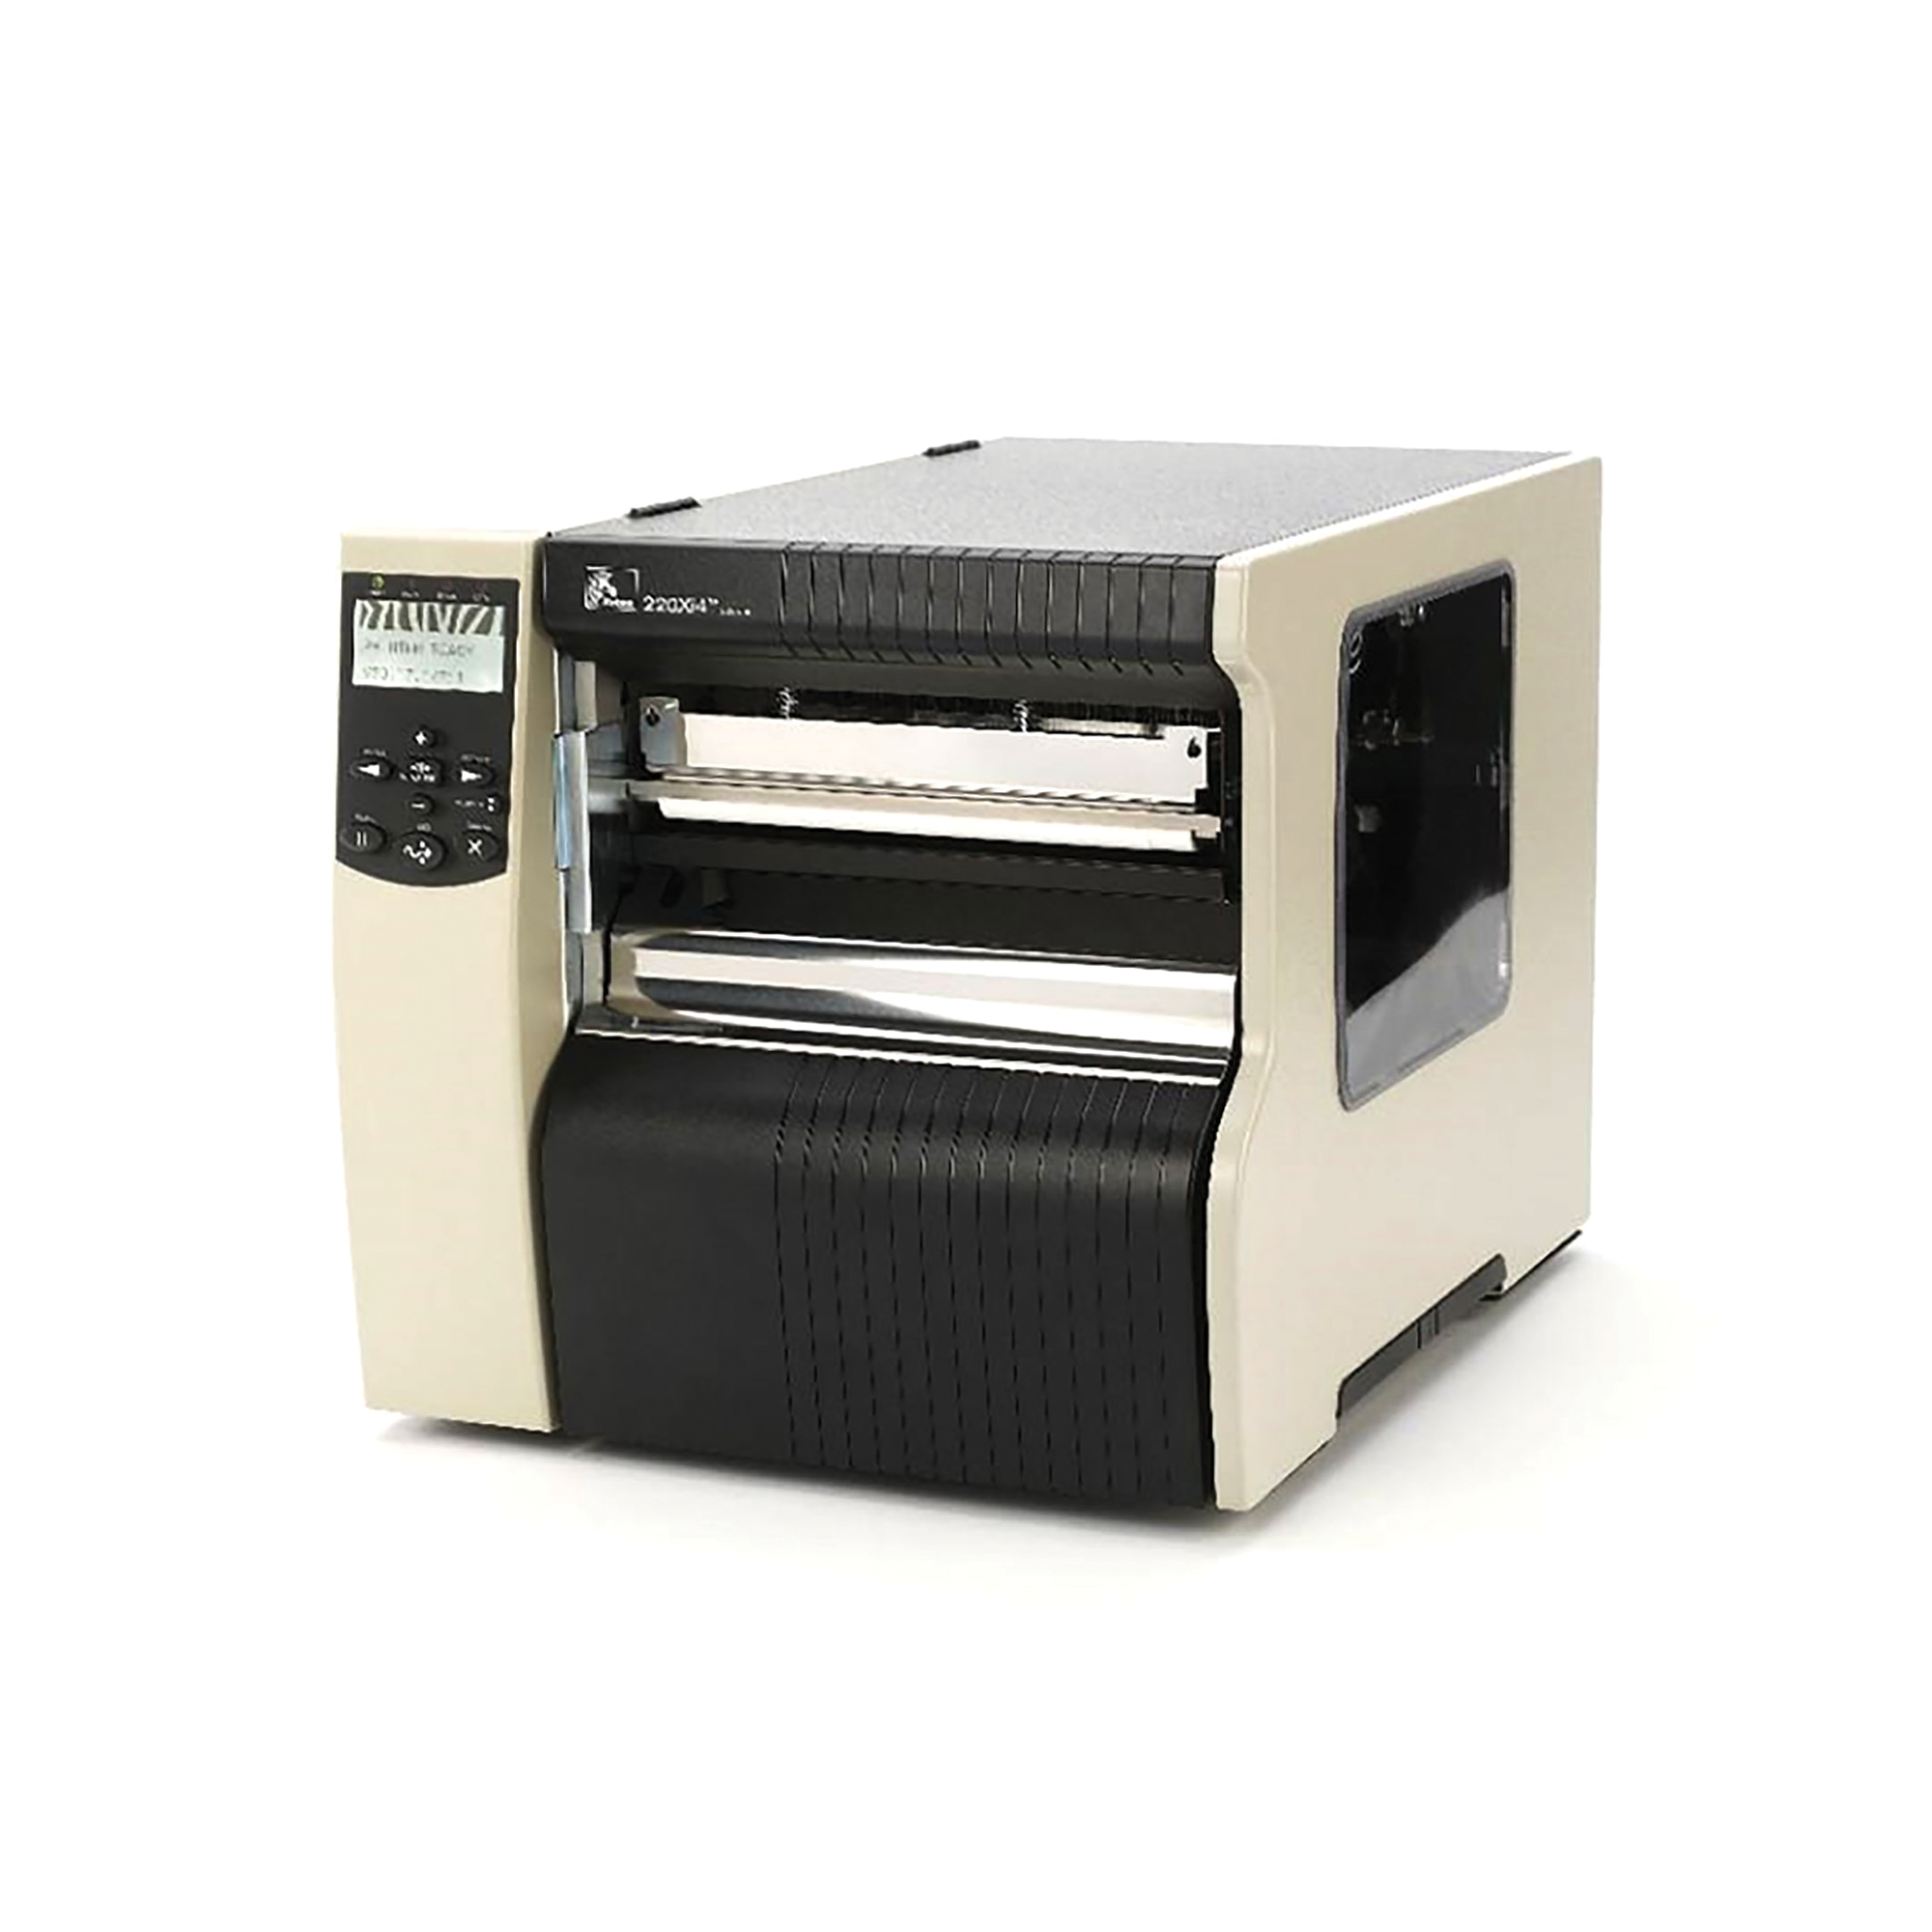 Zebra 220Xi4 Thermal Transfer Printer - 300dpi, US Cord, Serial, Parallel, USB, Int 10/100 - MPN: 223-801-00000